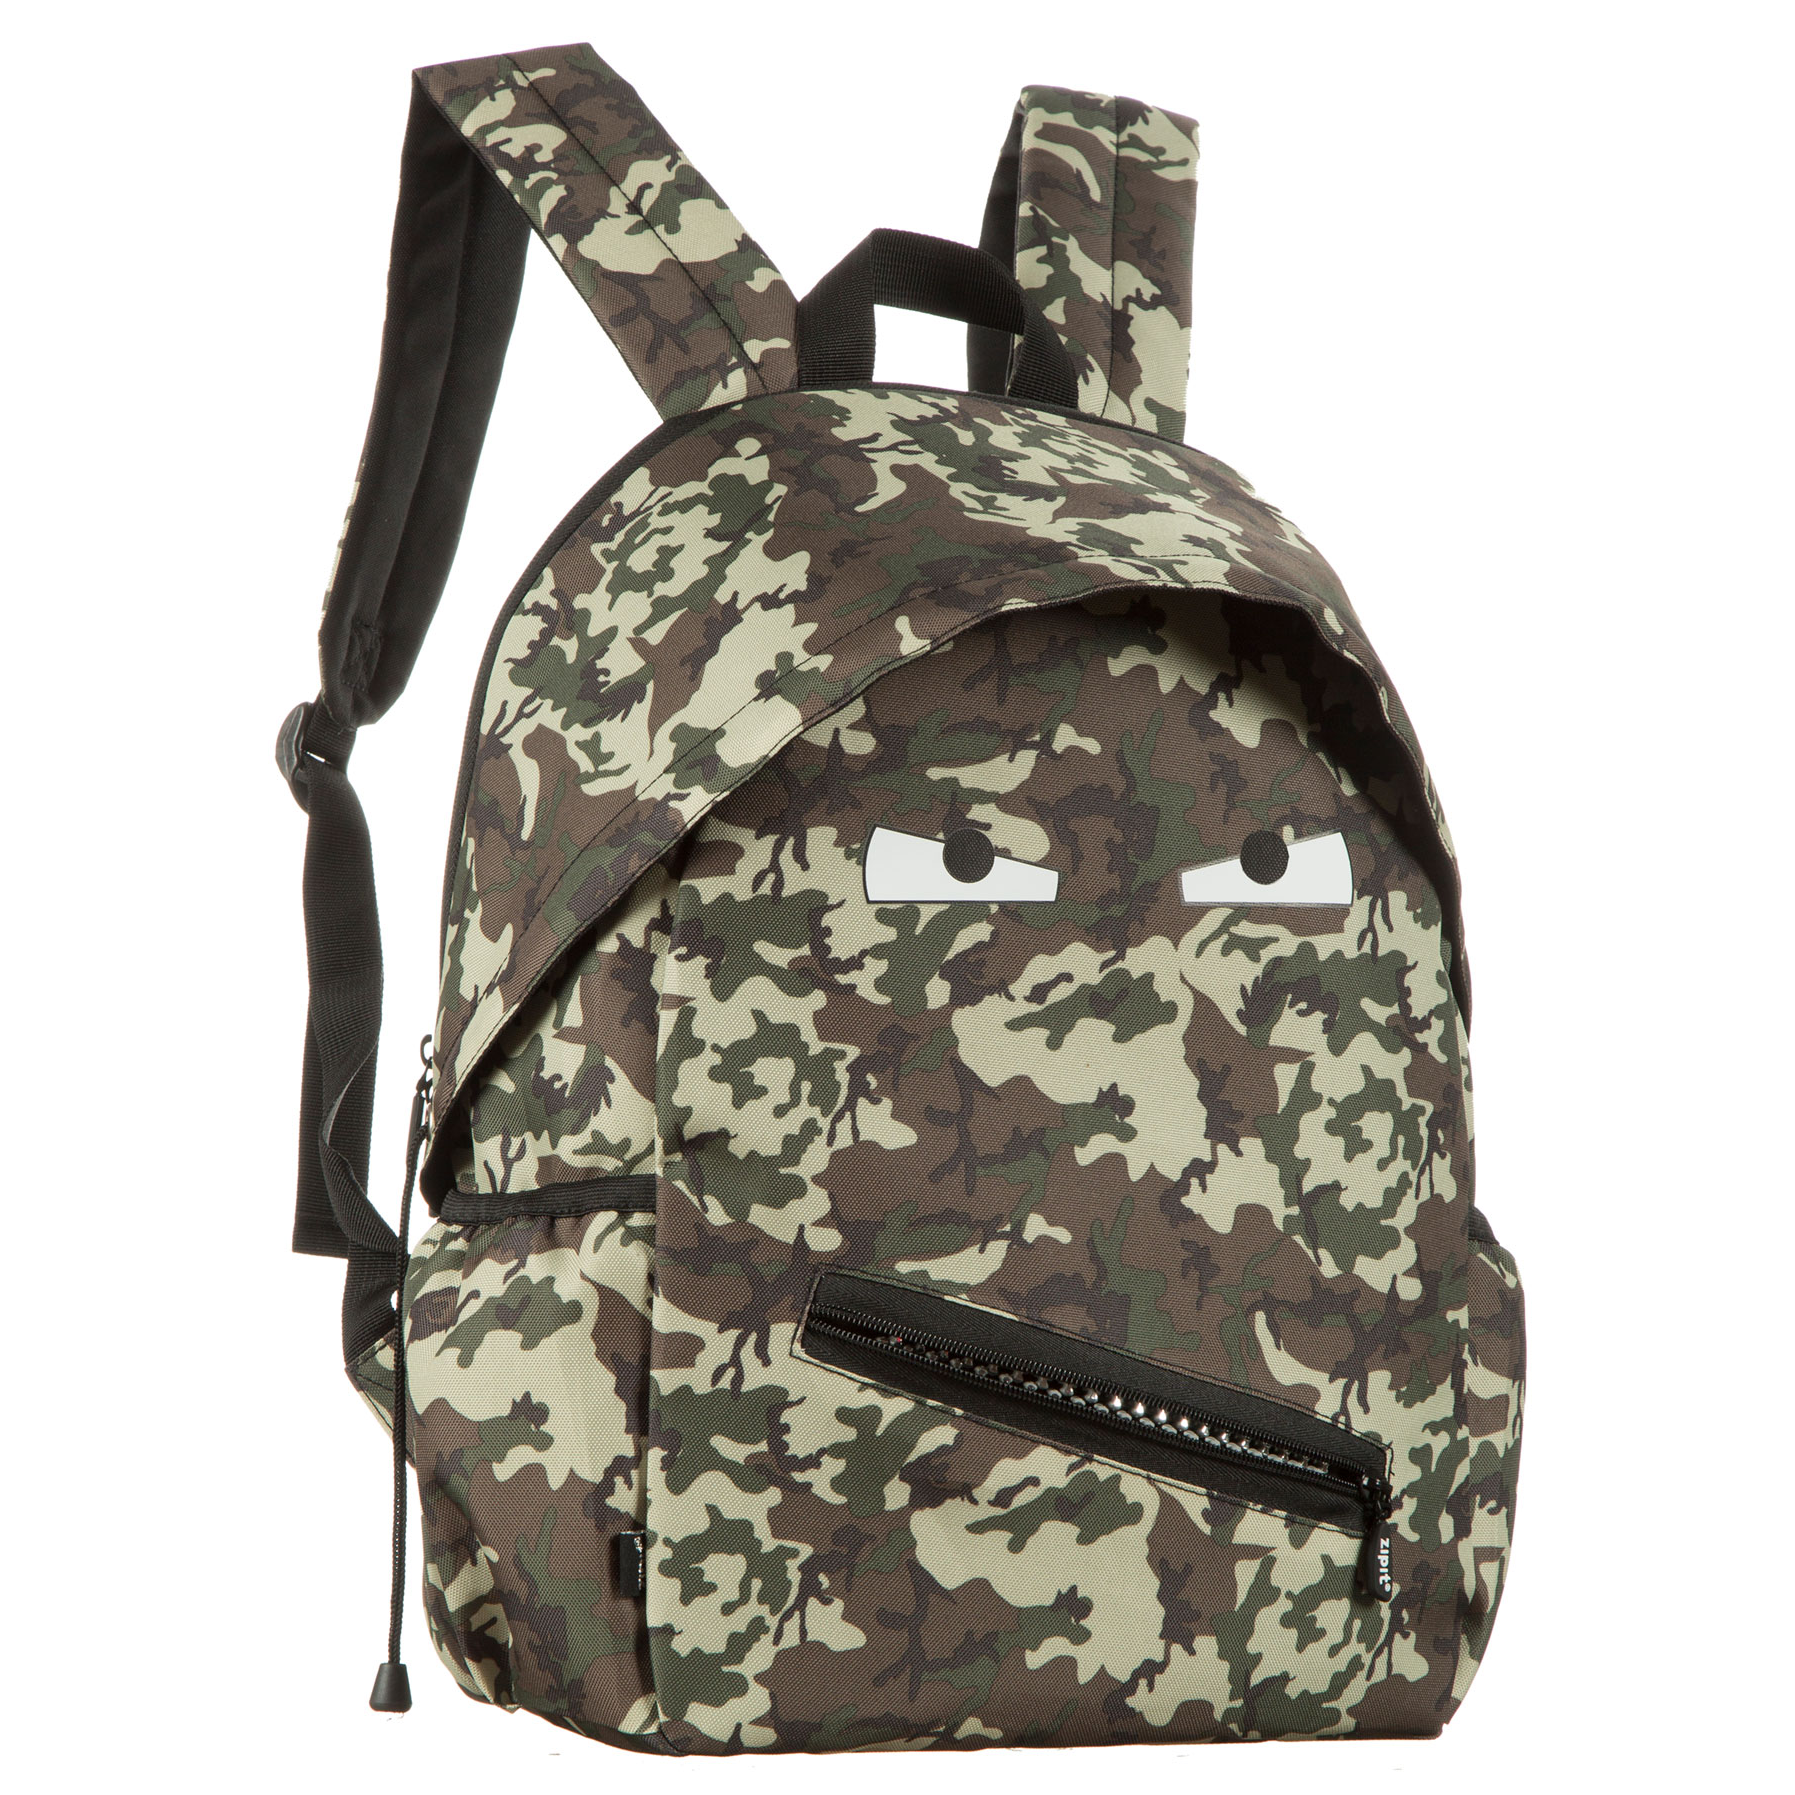 ZIPIT Grillz Backpack for Boys Elementary School & Preschool, Sturdy & Lightweight (Camo Green) - image 5 of 10